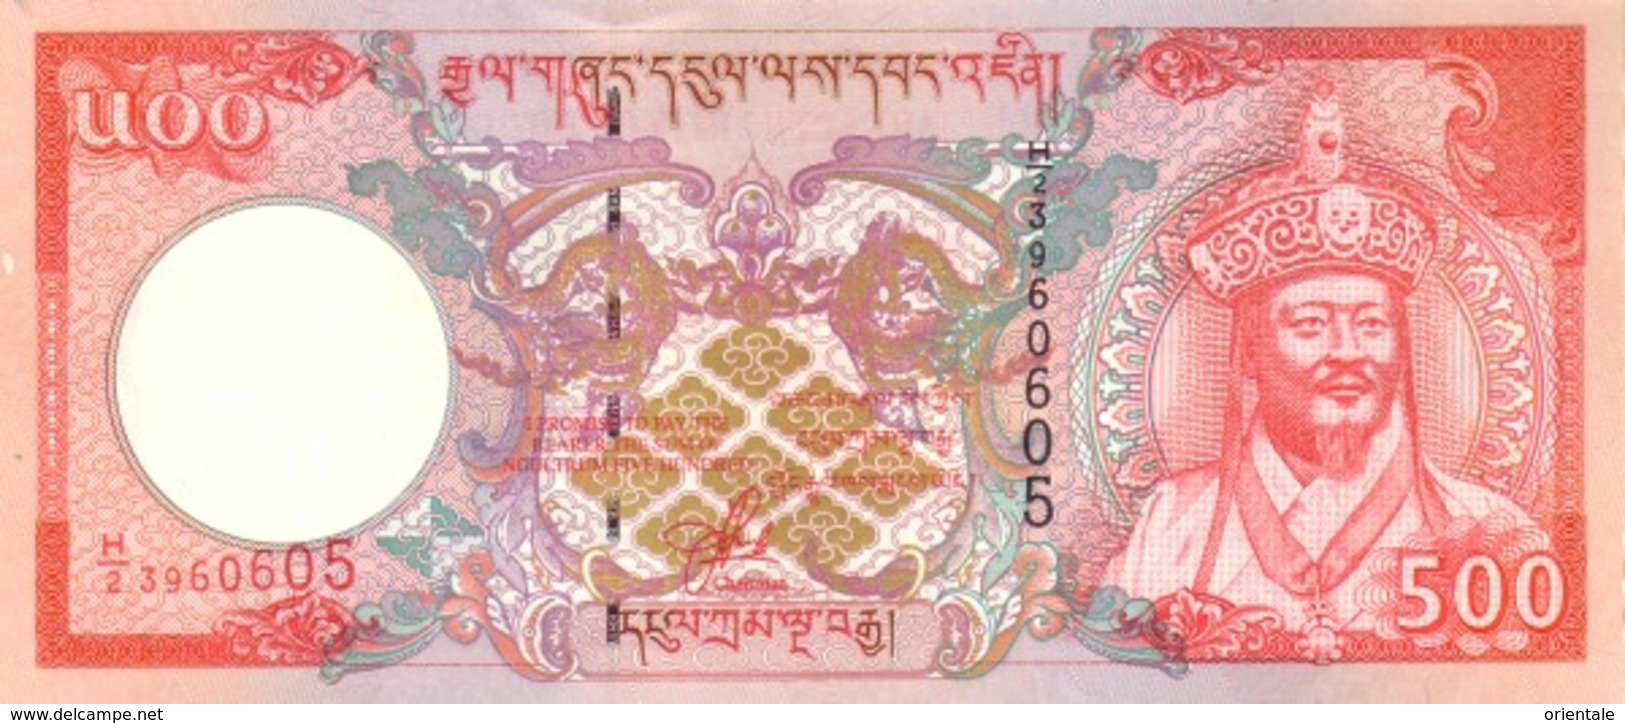 BHUTAN P. 26  500 N  2000 UNC - Bhutan